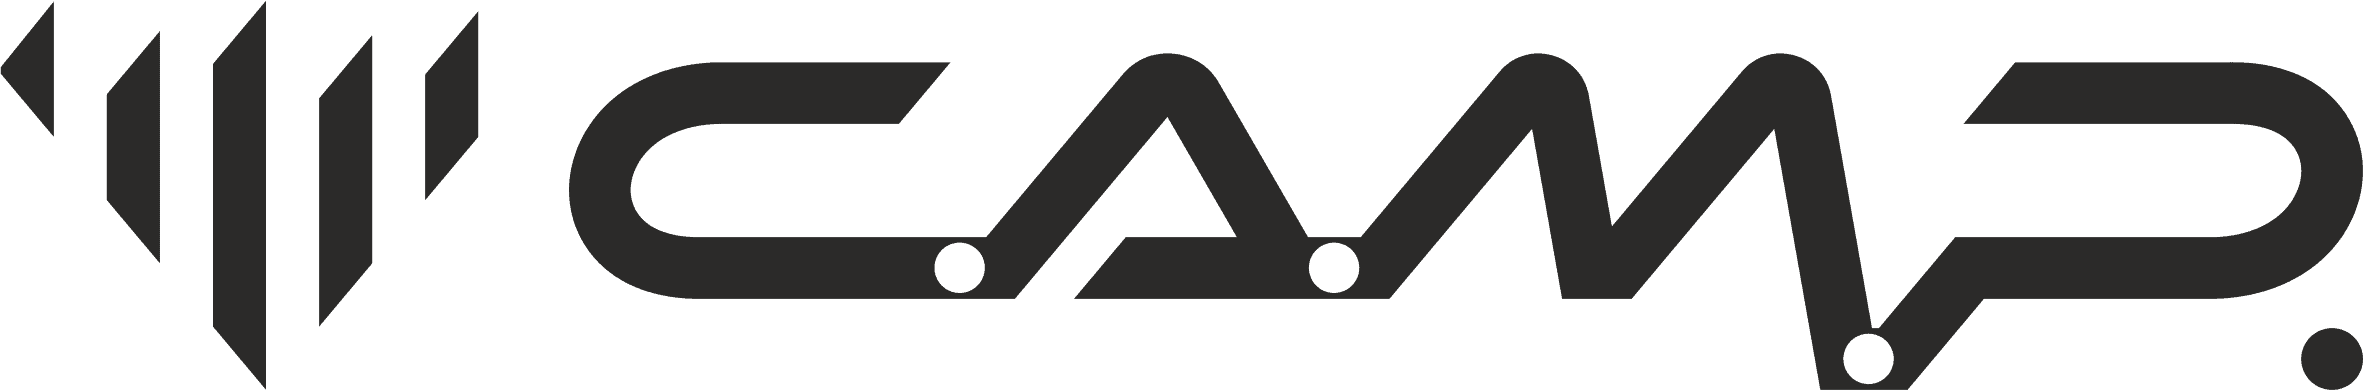 CAMP logo black_no trademark